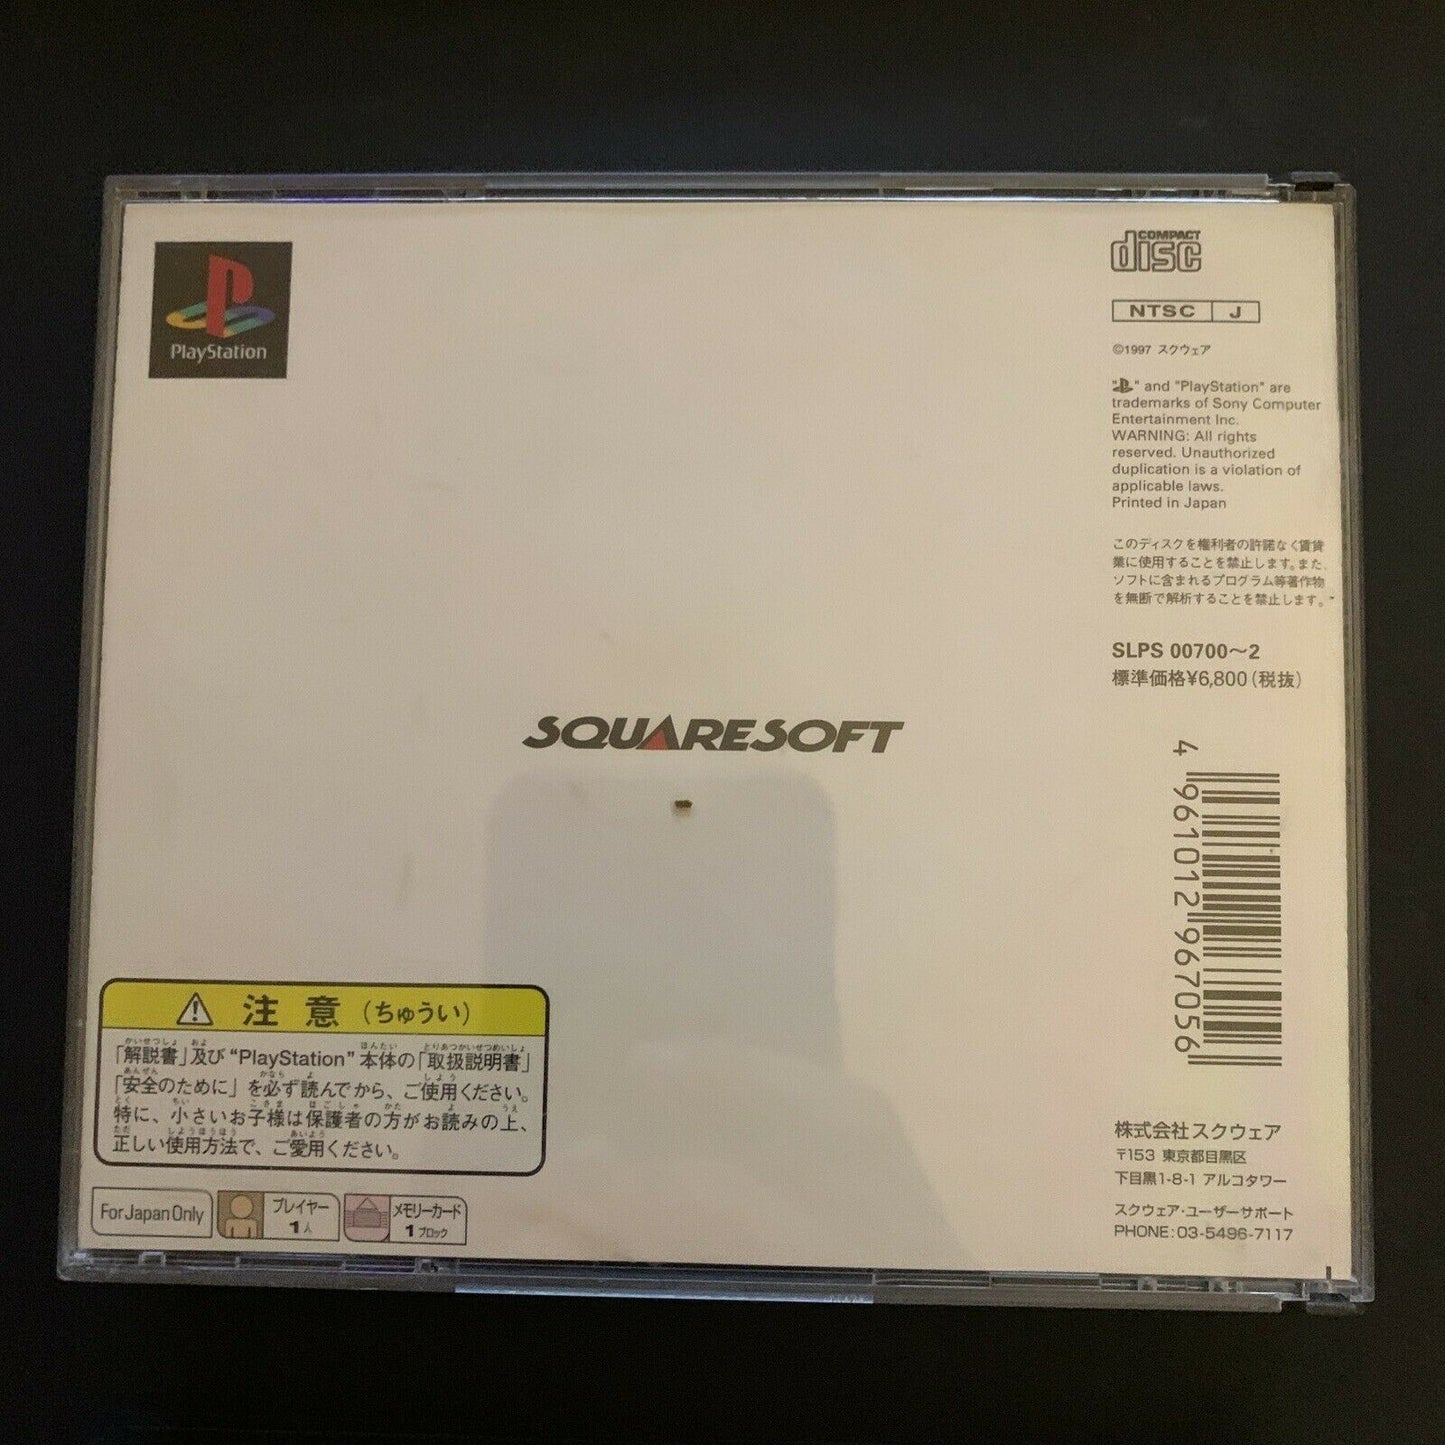 Final Fantasy 7,8,9 Collection - Playstation PS1 NTSC-J Japan Square RPG Game